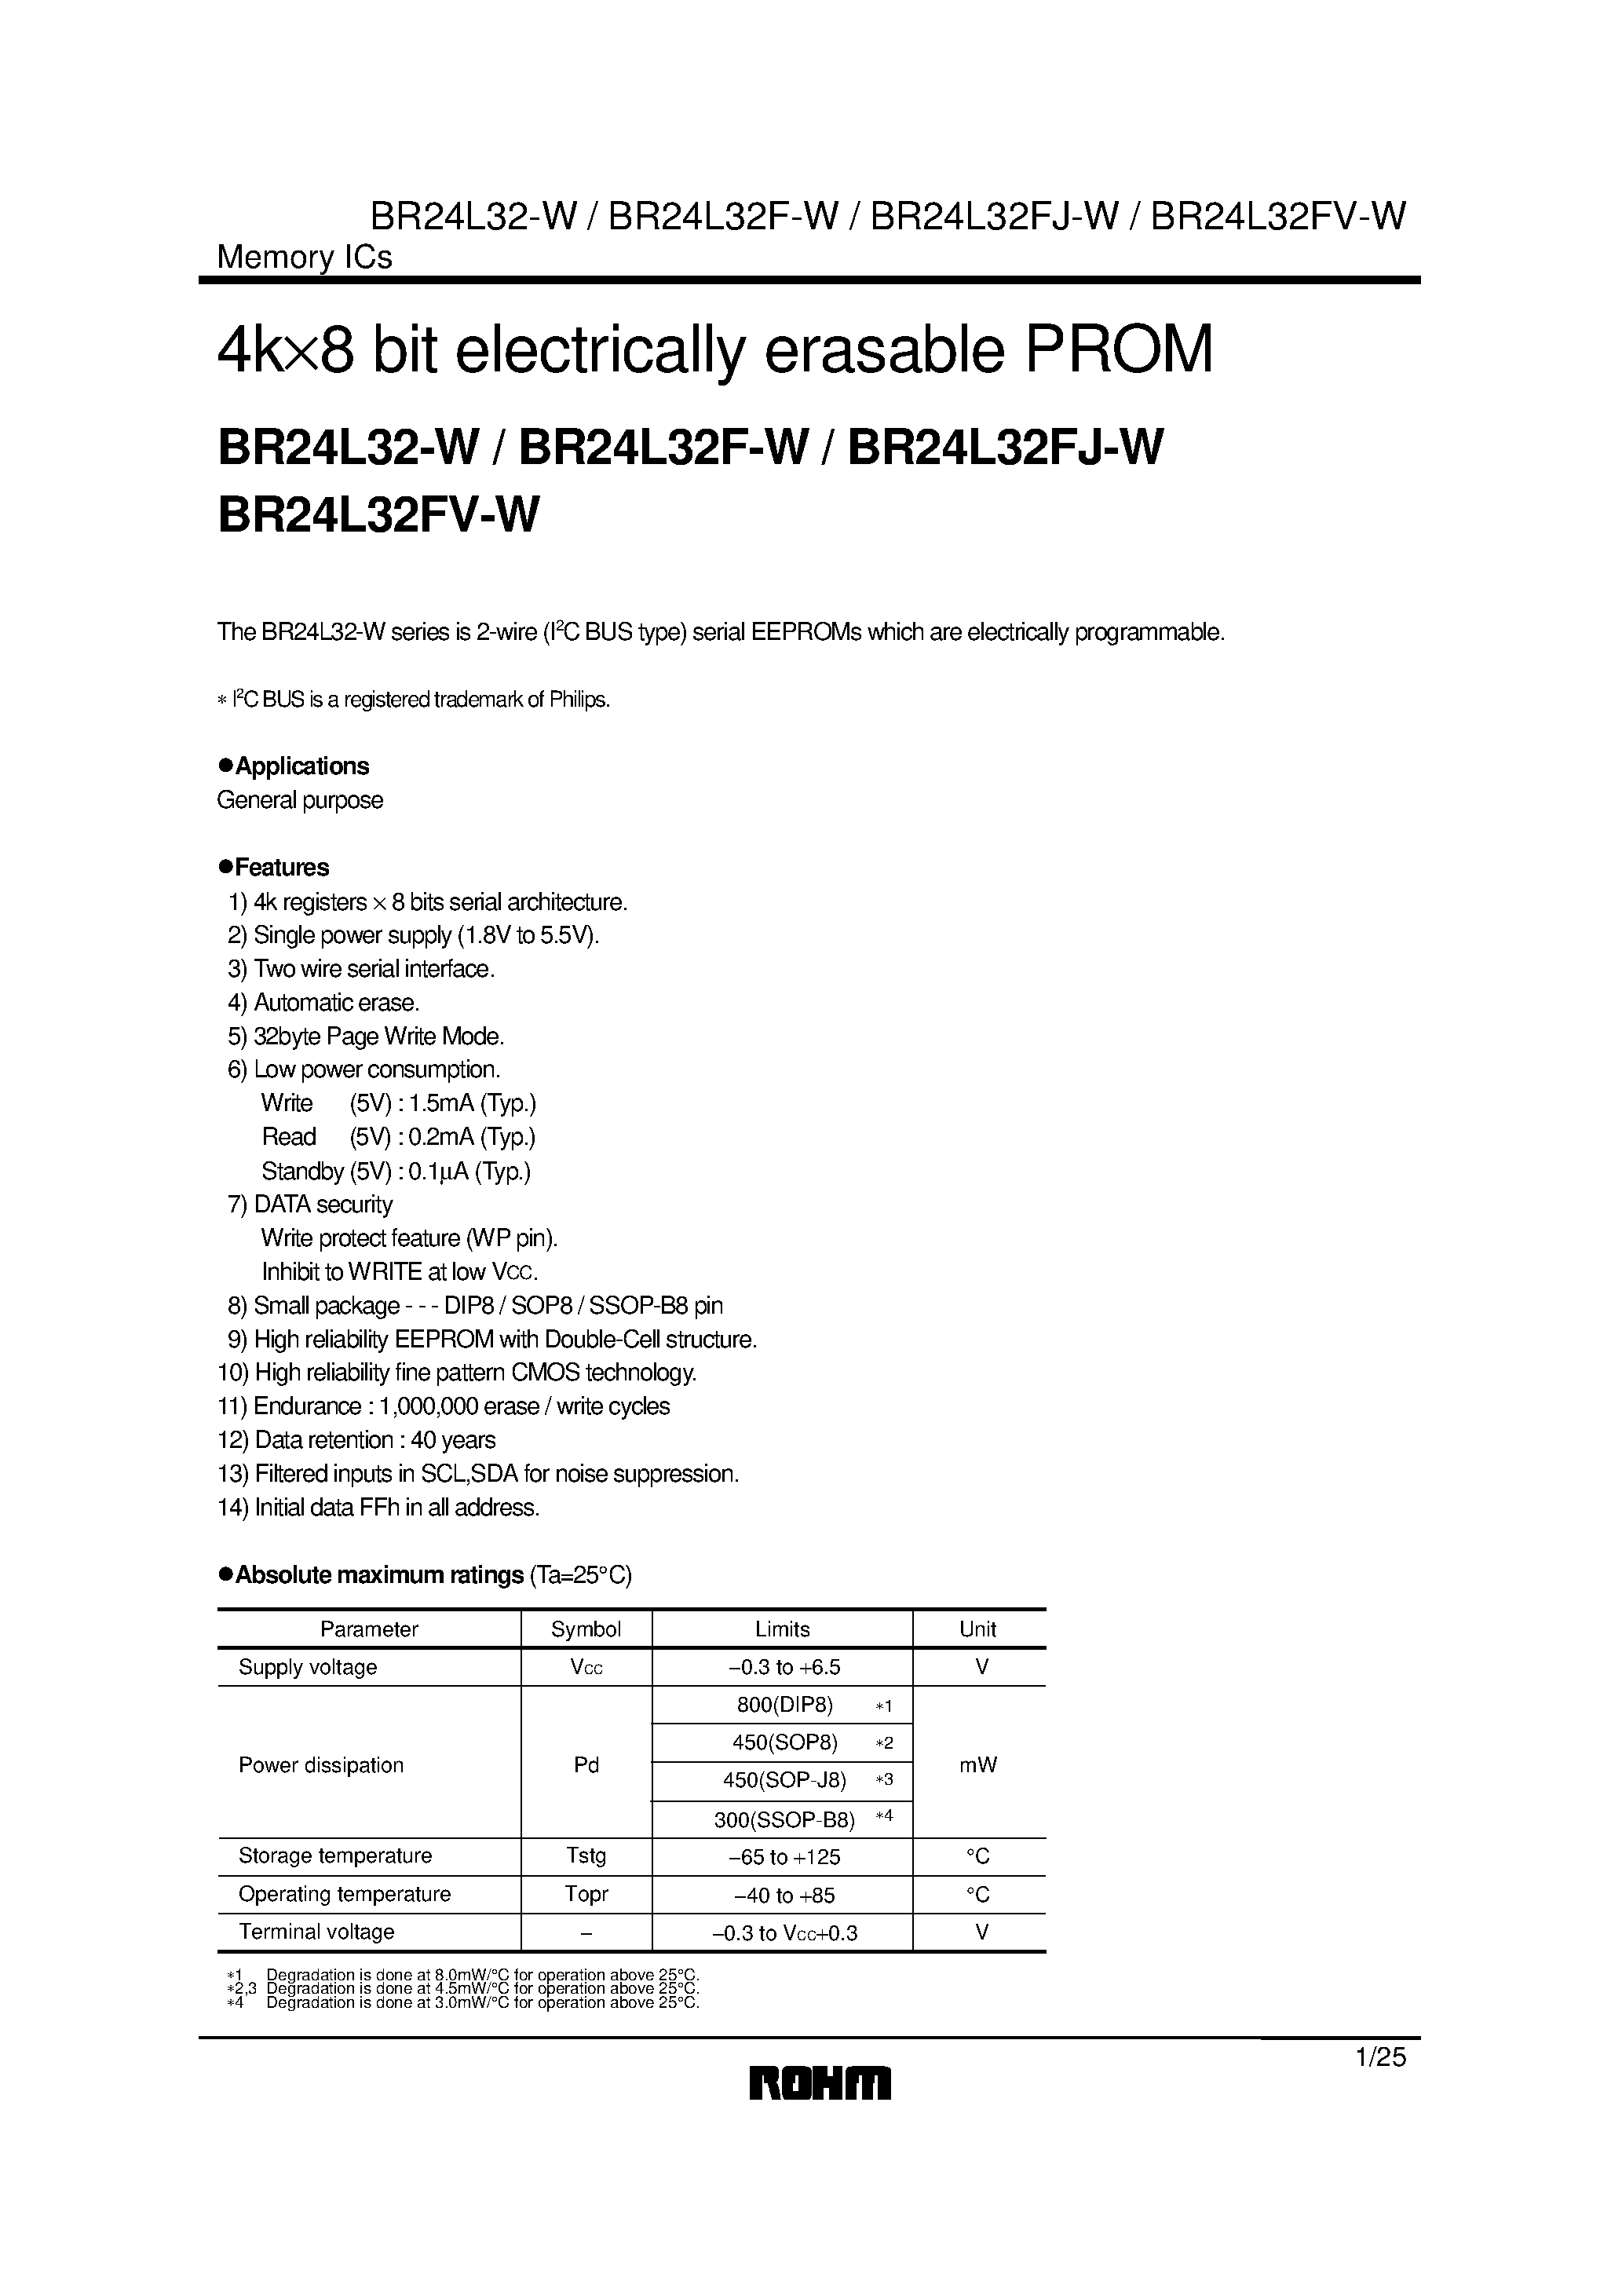 Datasheet BR24L32-W - 4k8 bit electrically erasable PROM page 1